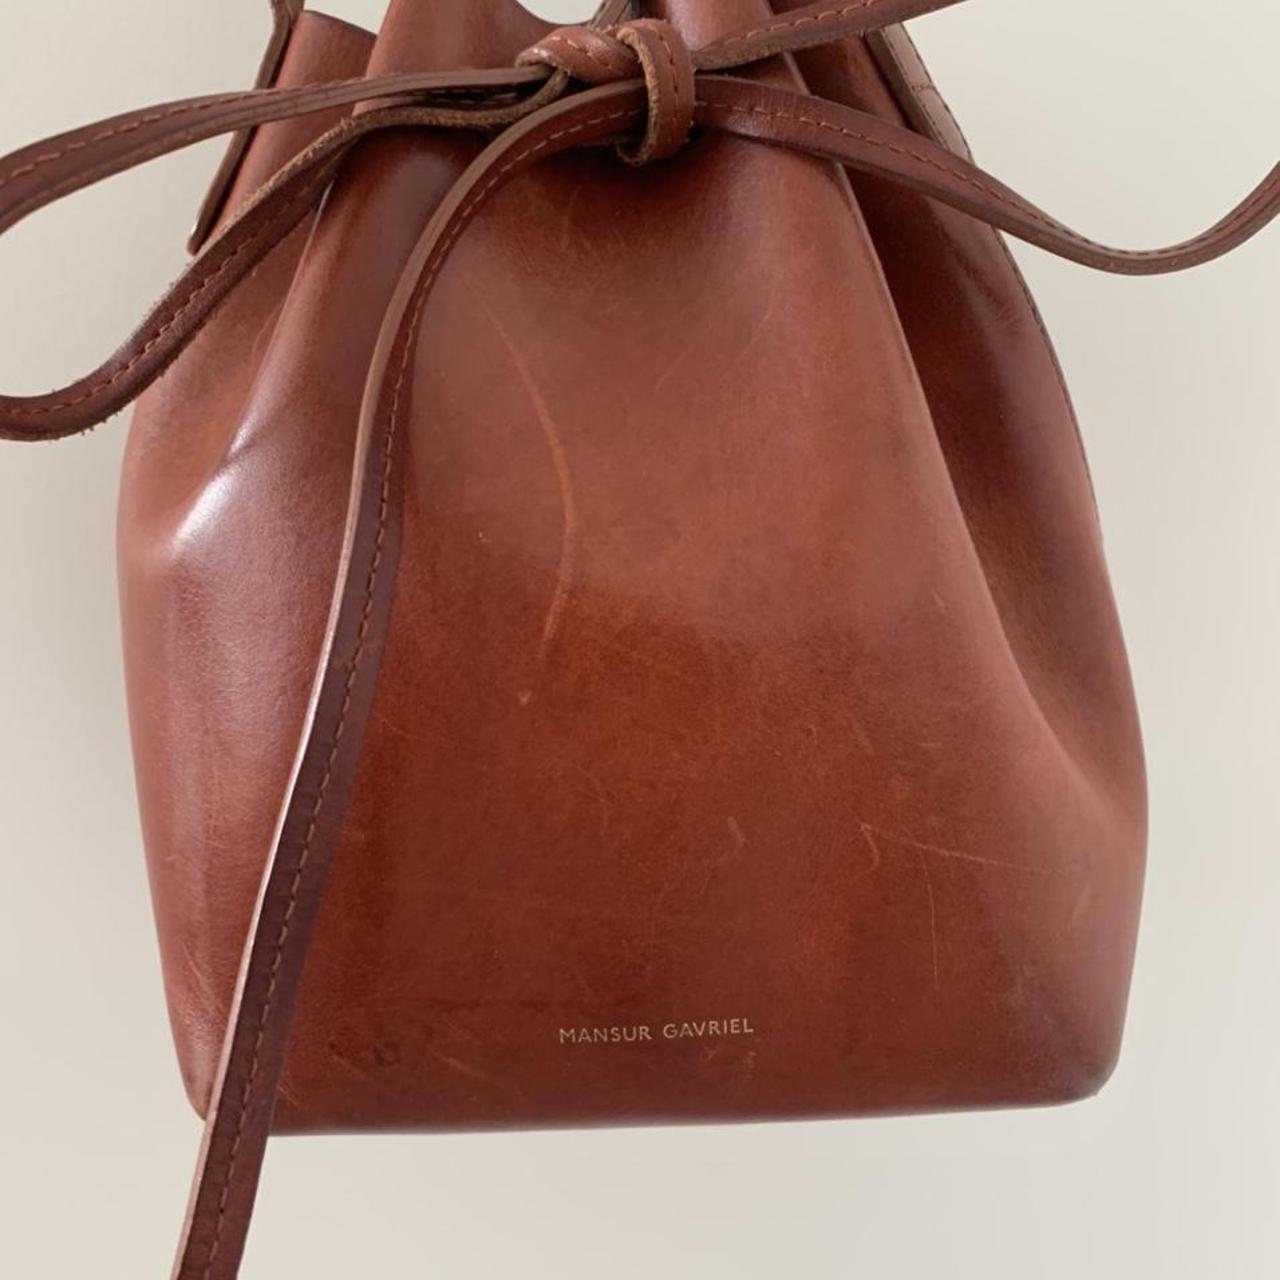 Product Image 1 - Mini Mini Mansur Bucket Bag
Brown